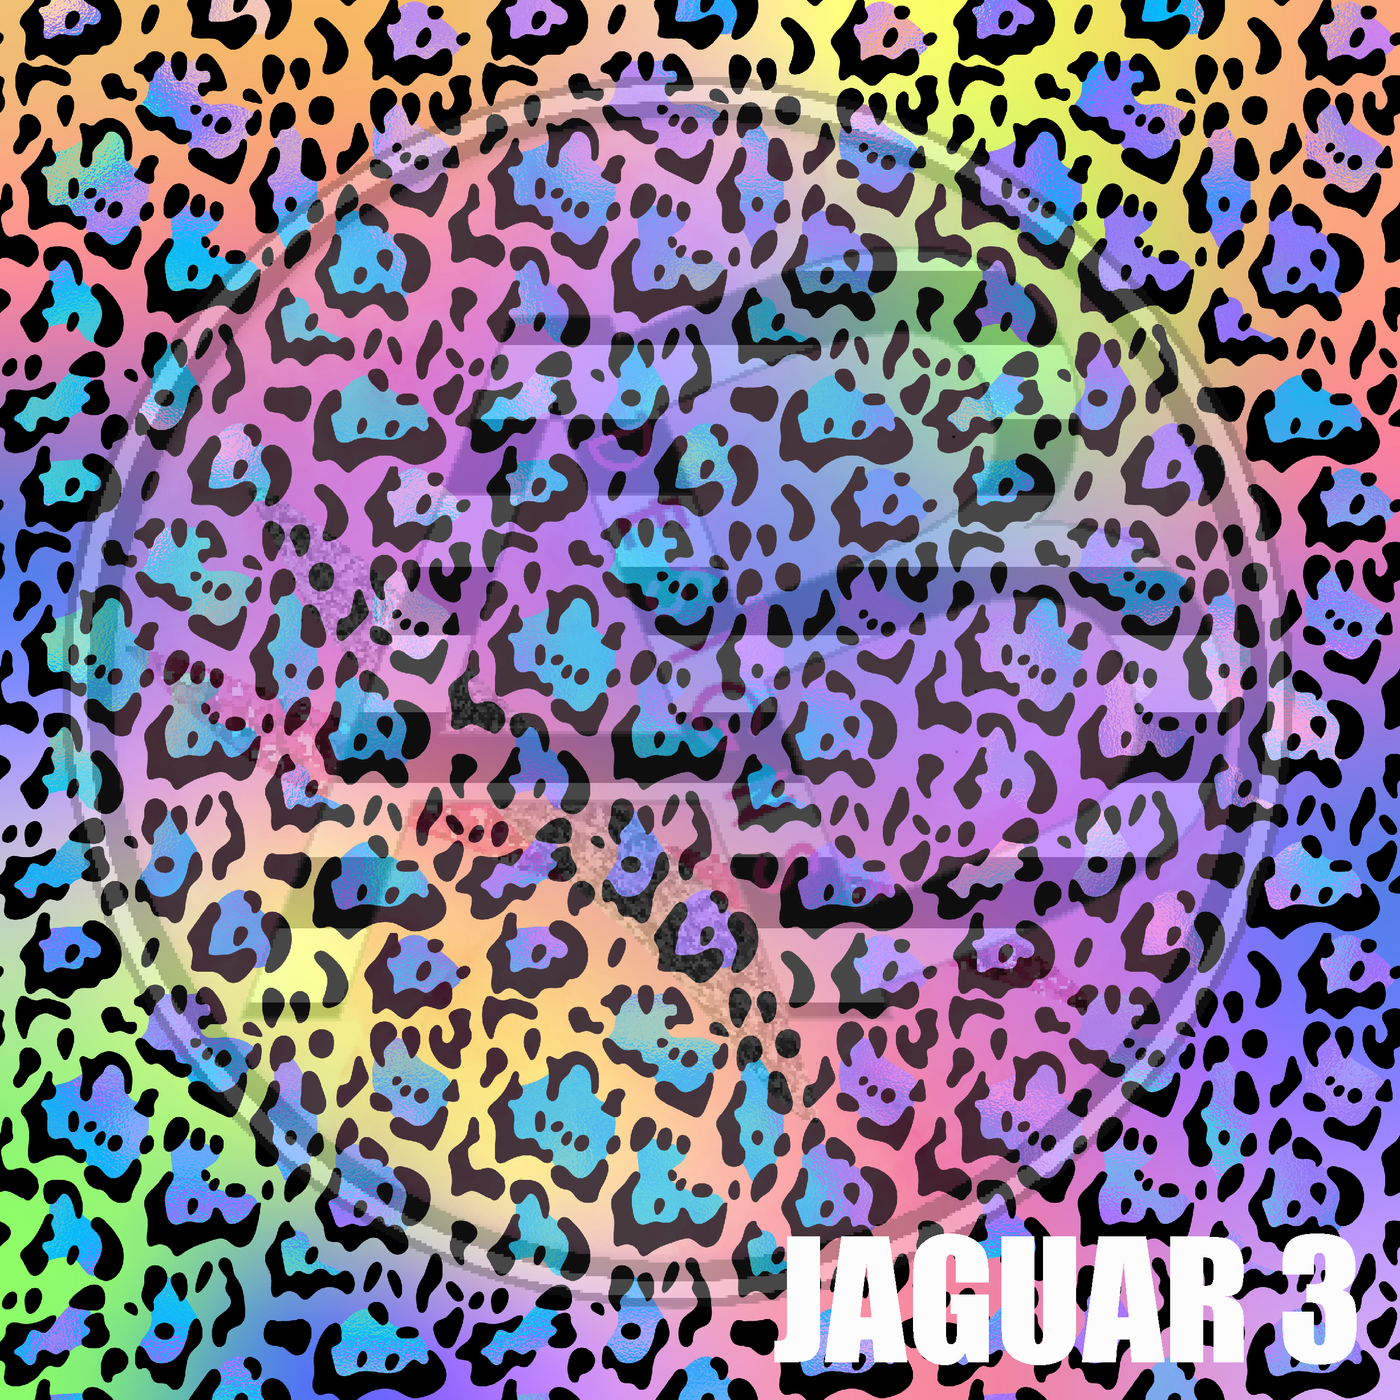 Adhesive Patterned Vinyl - Jaguar 03